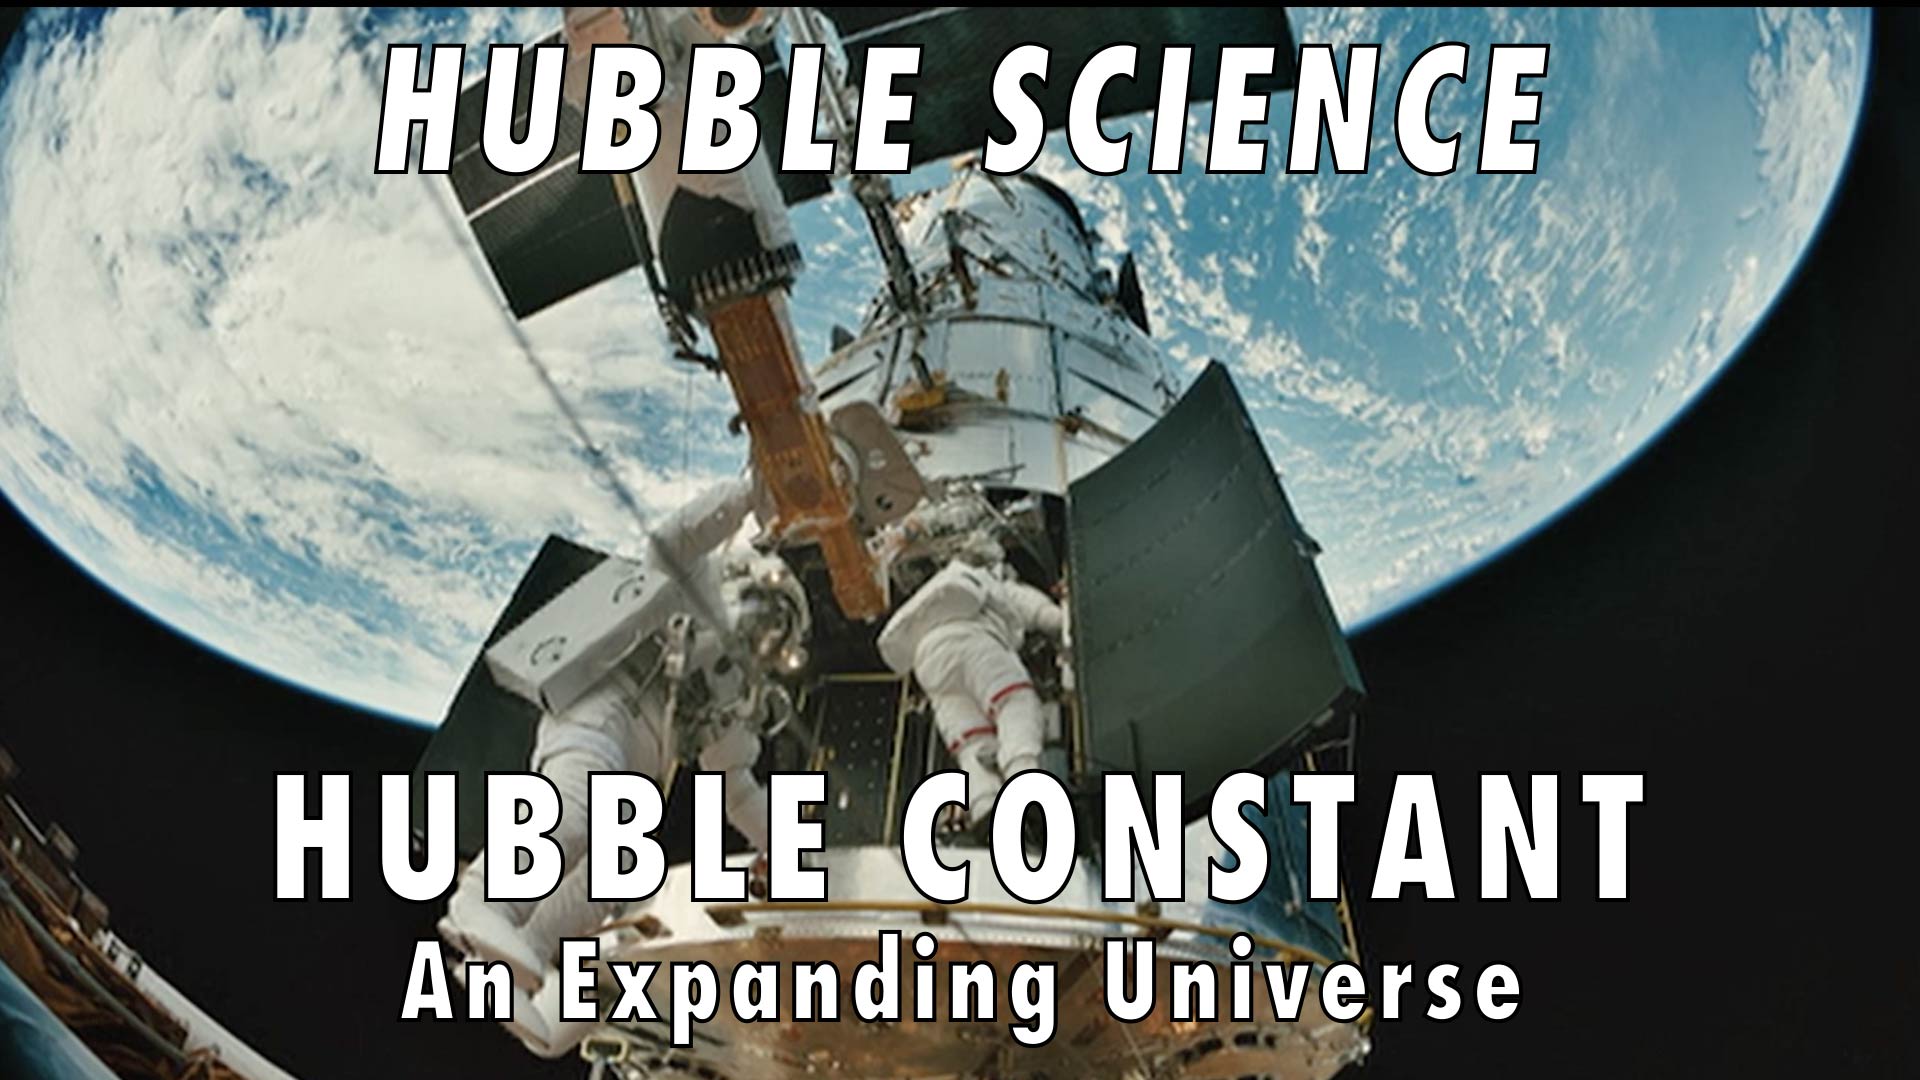 Preview Image for Hubble Science: Hubble Constant, An Expanding Universe